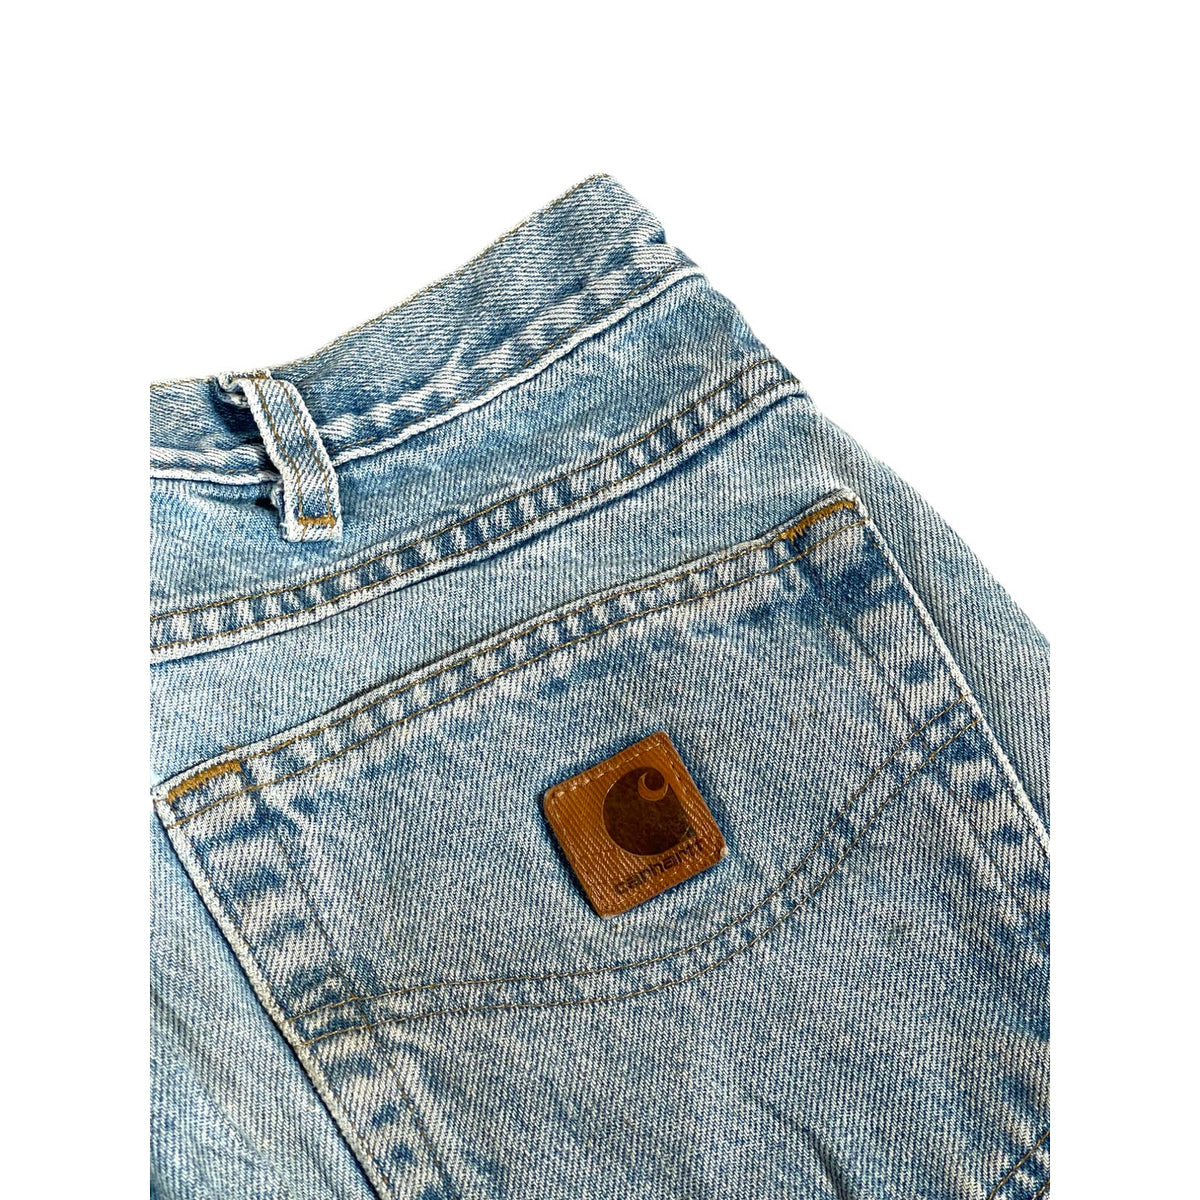 Vintage Carhartt Distressed Light Blue Denim Jeans 32x32